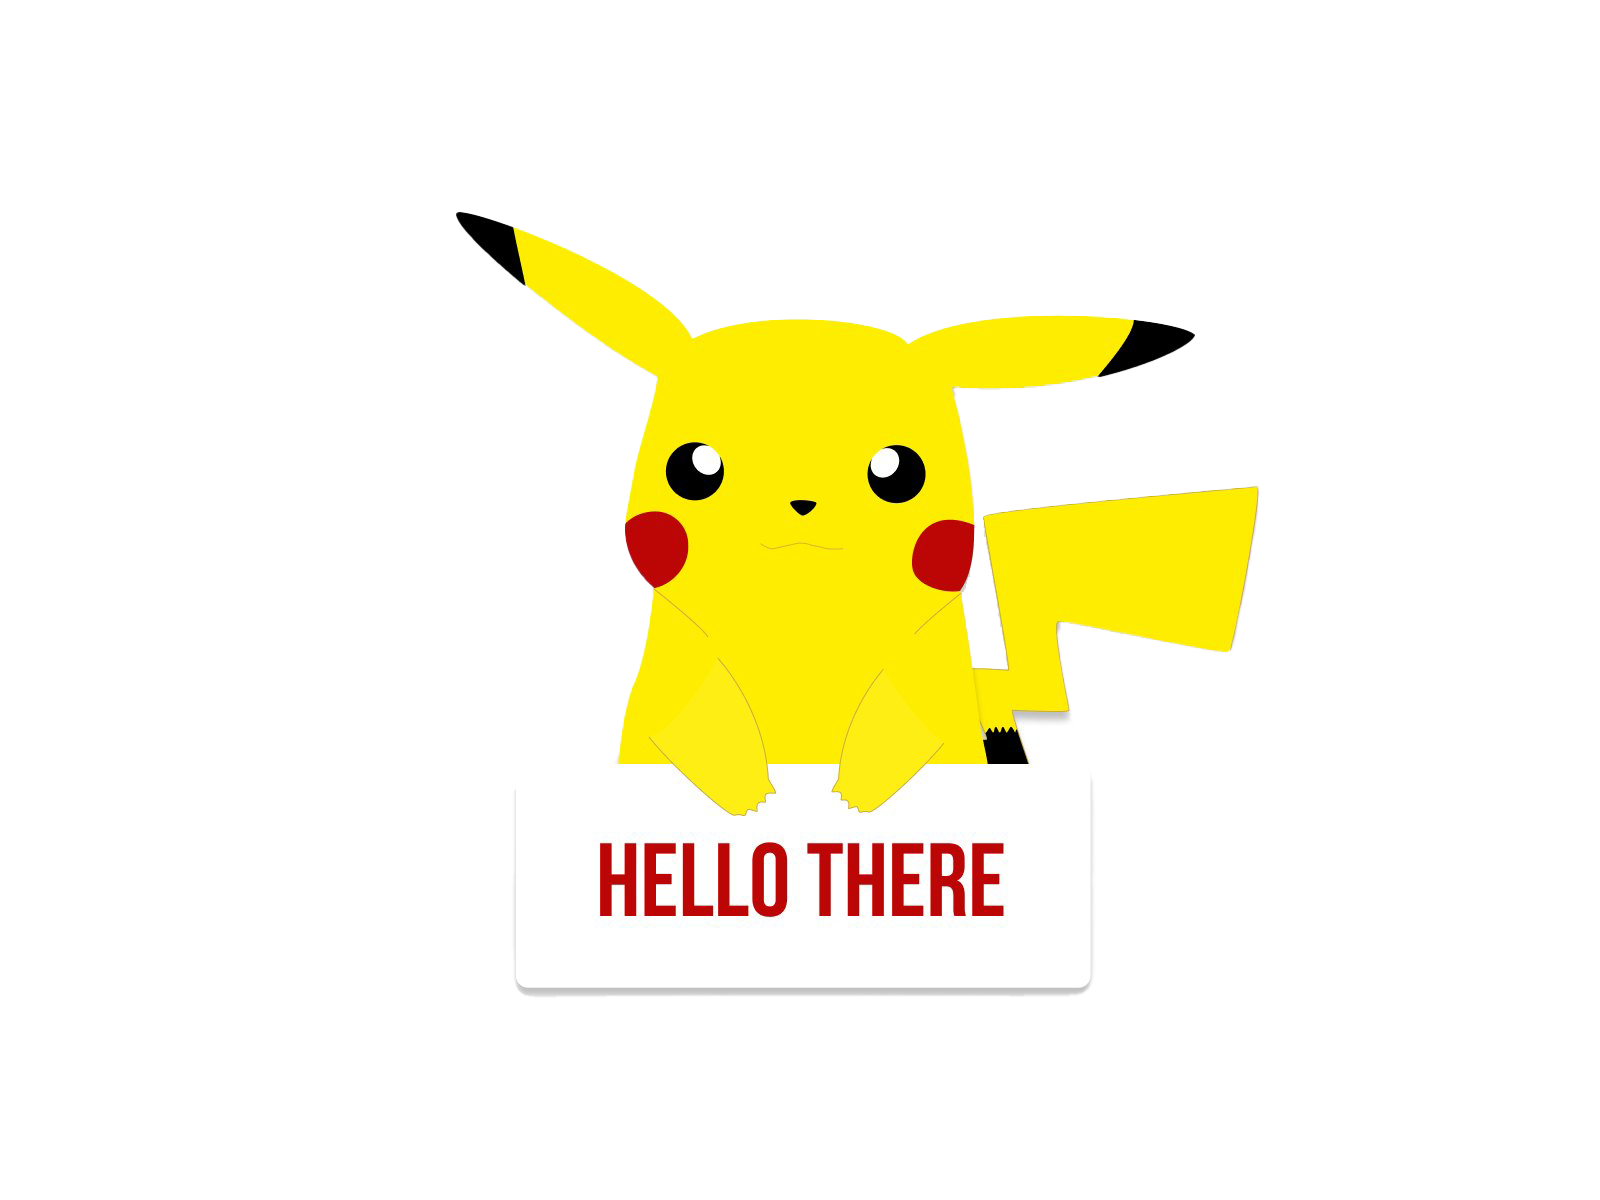 Pikachu PNG Image